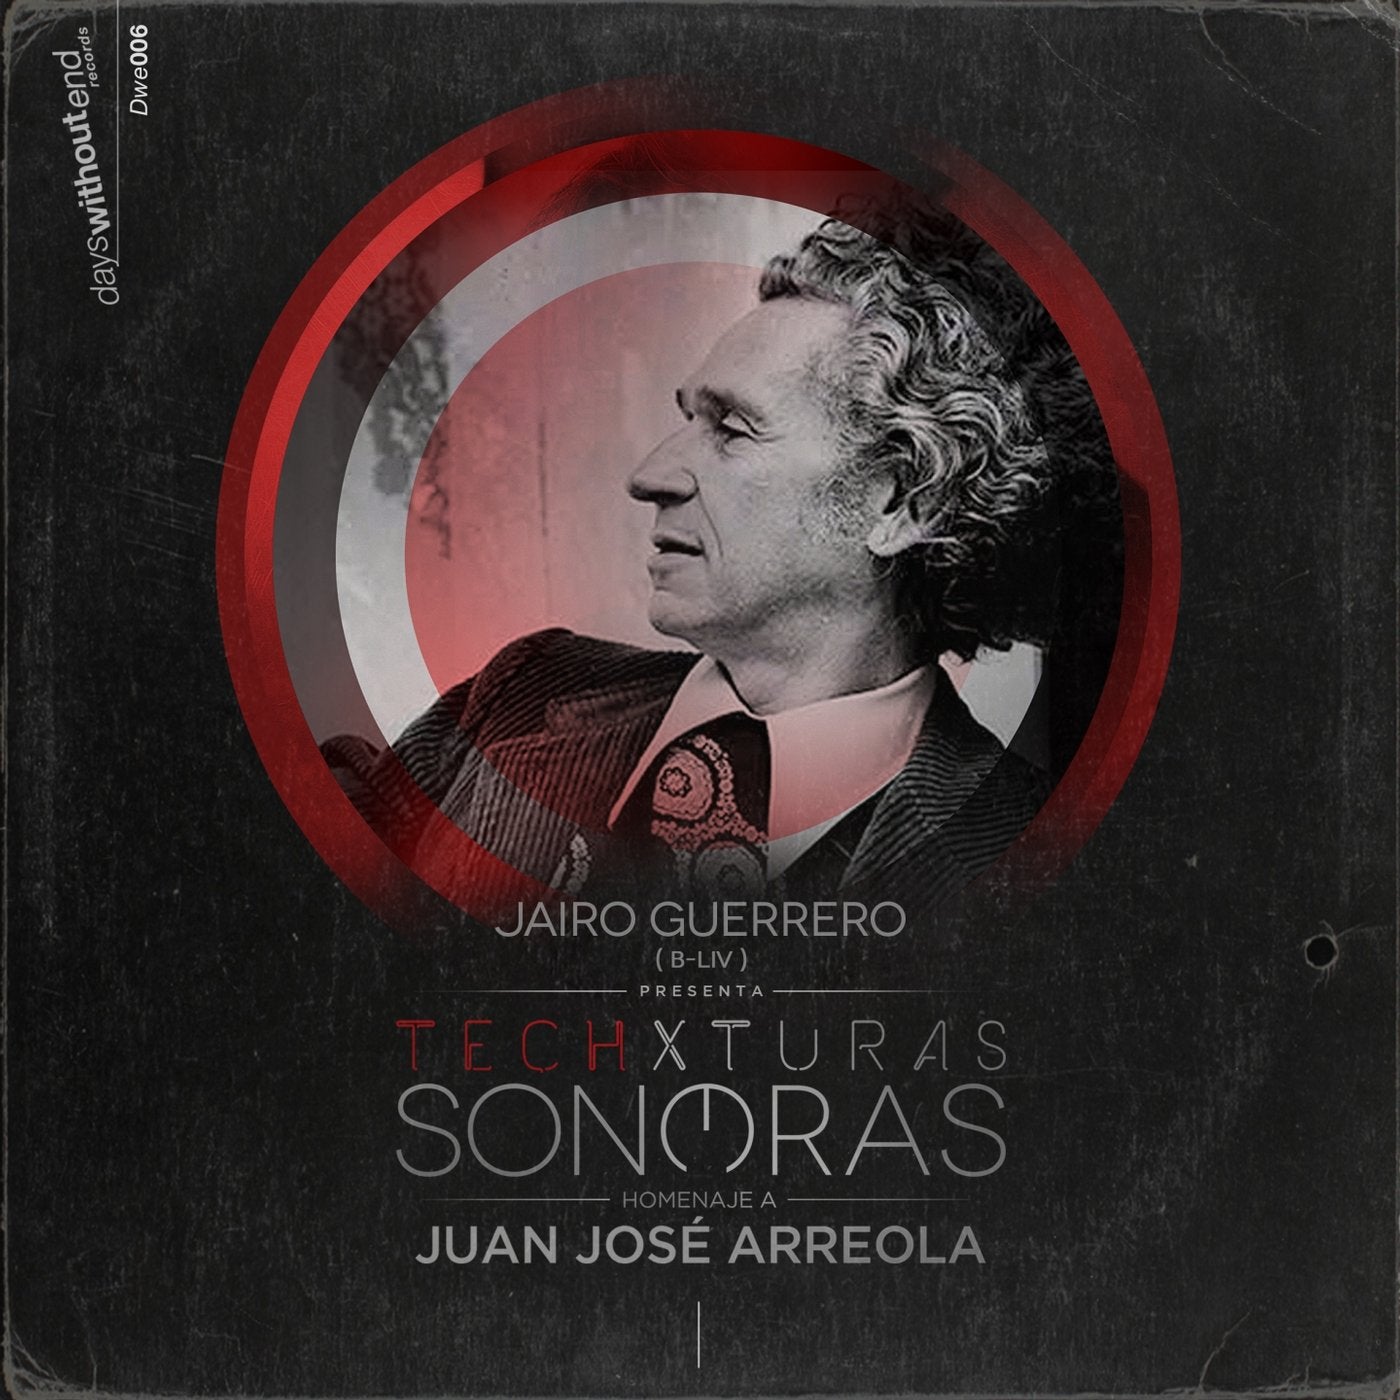 Jairo Guerrero Presenta Techxturas Sonoras (Homenaje a Juan Jose Arreola)